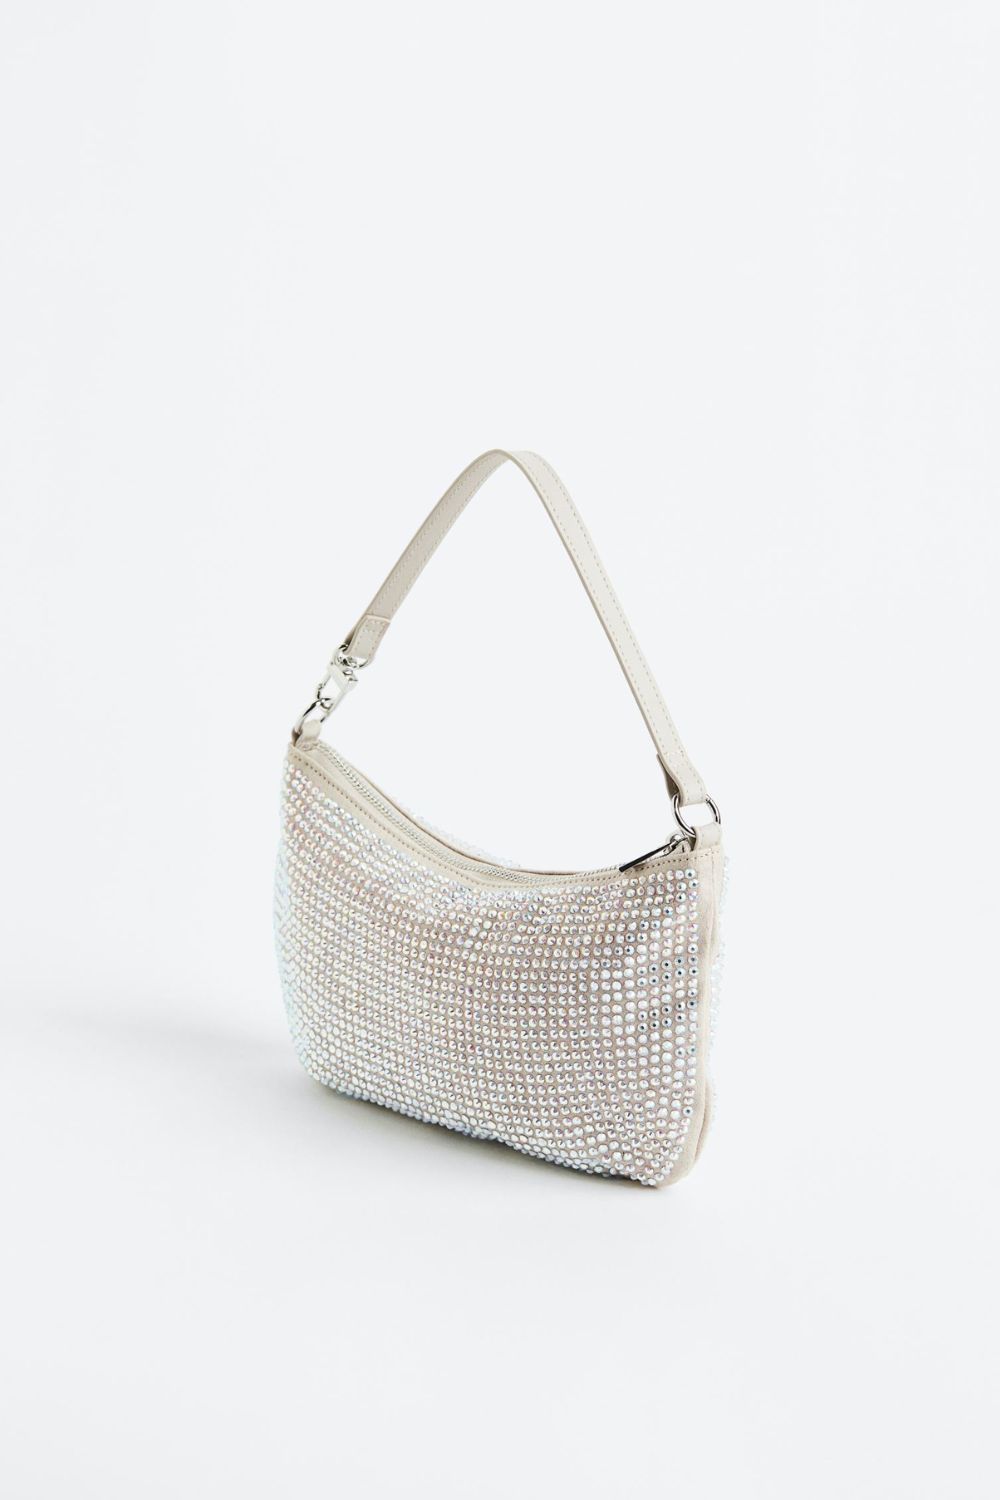 The-Gloss-Magazine-best-sparkling-handbags-2